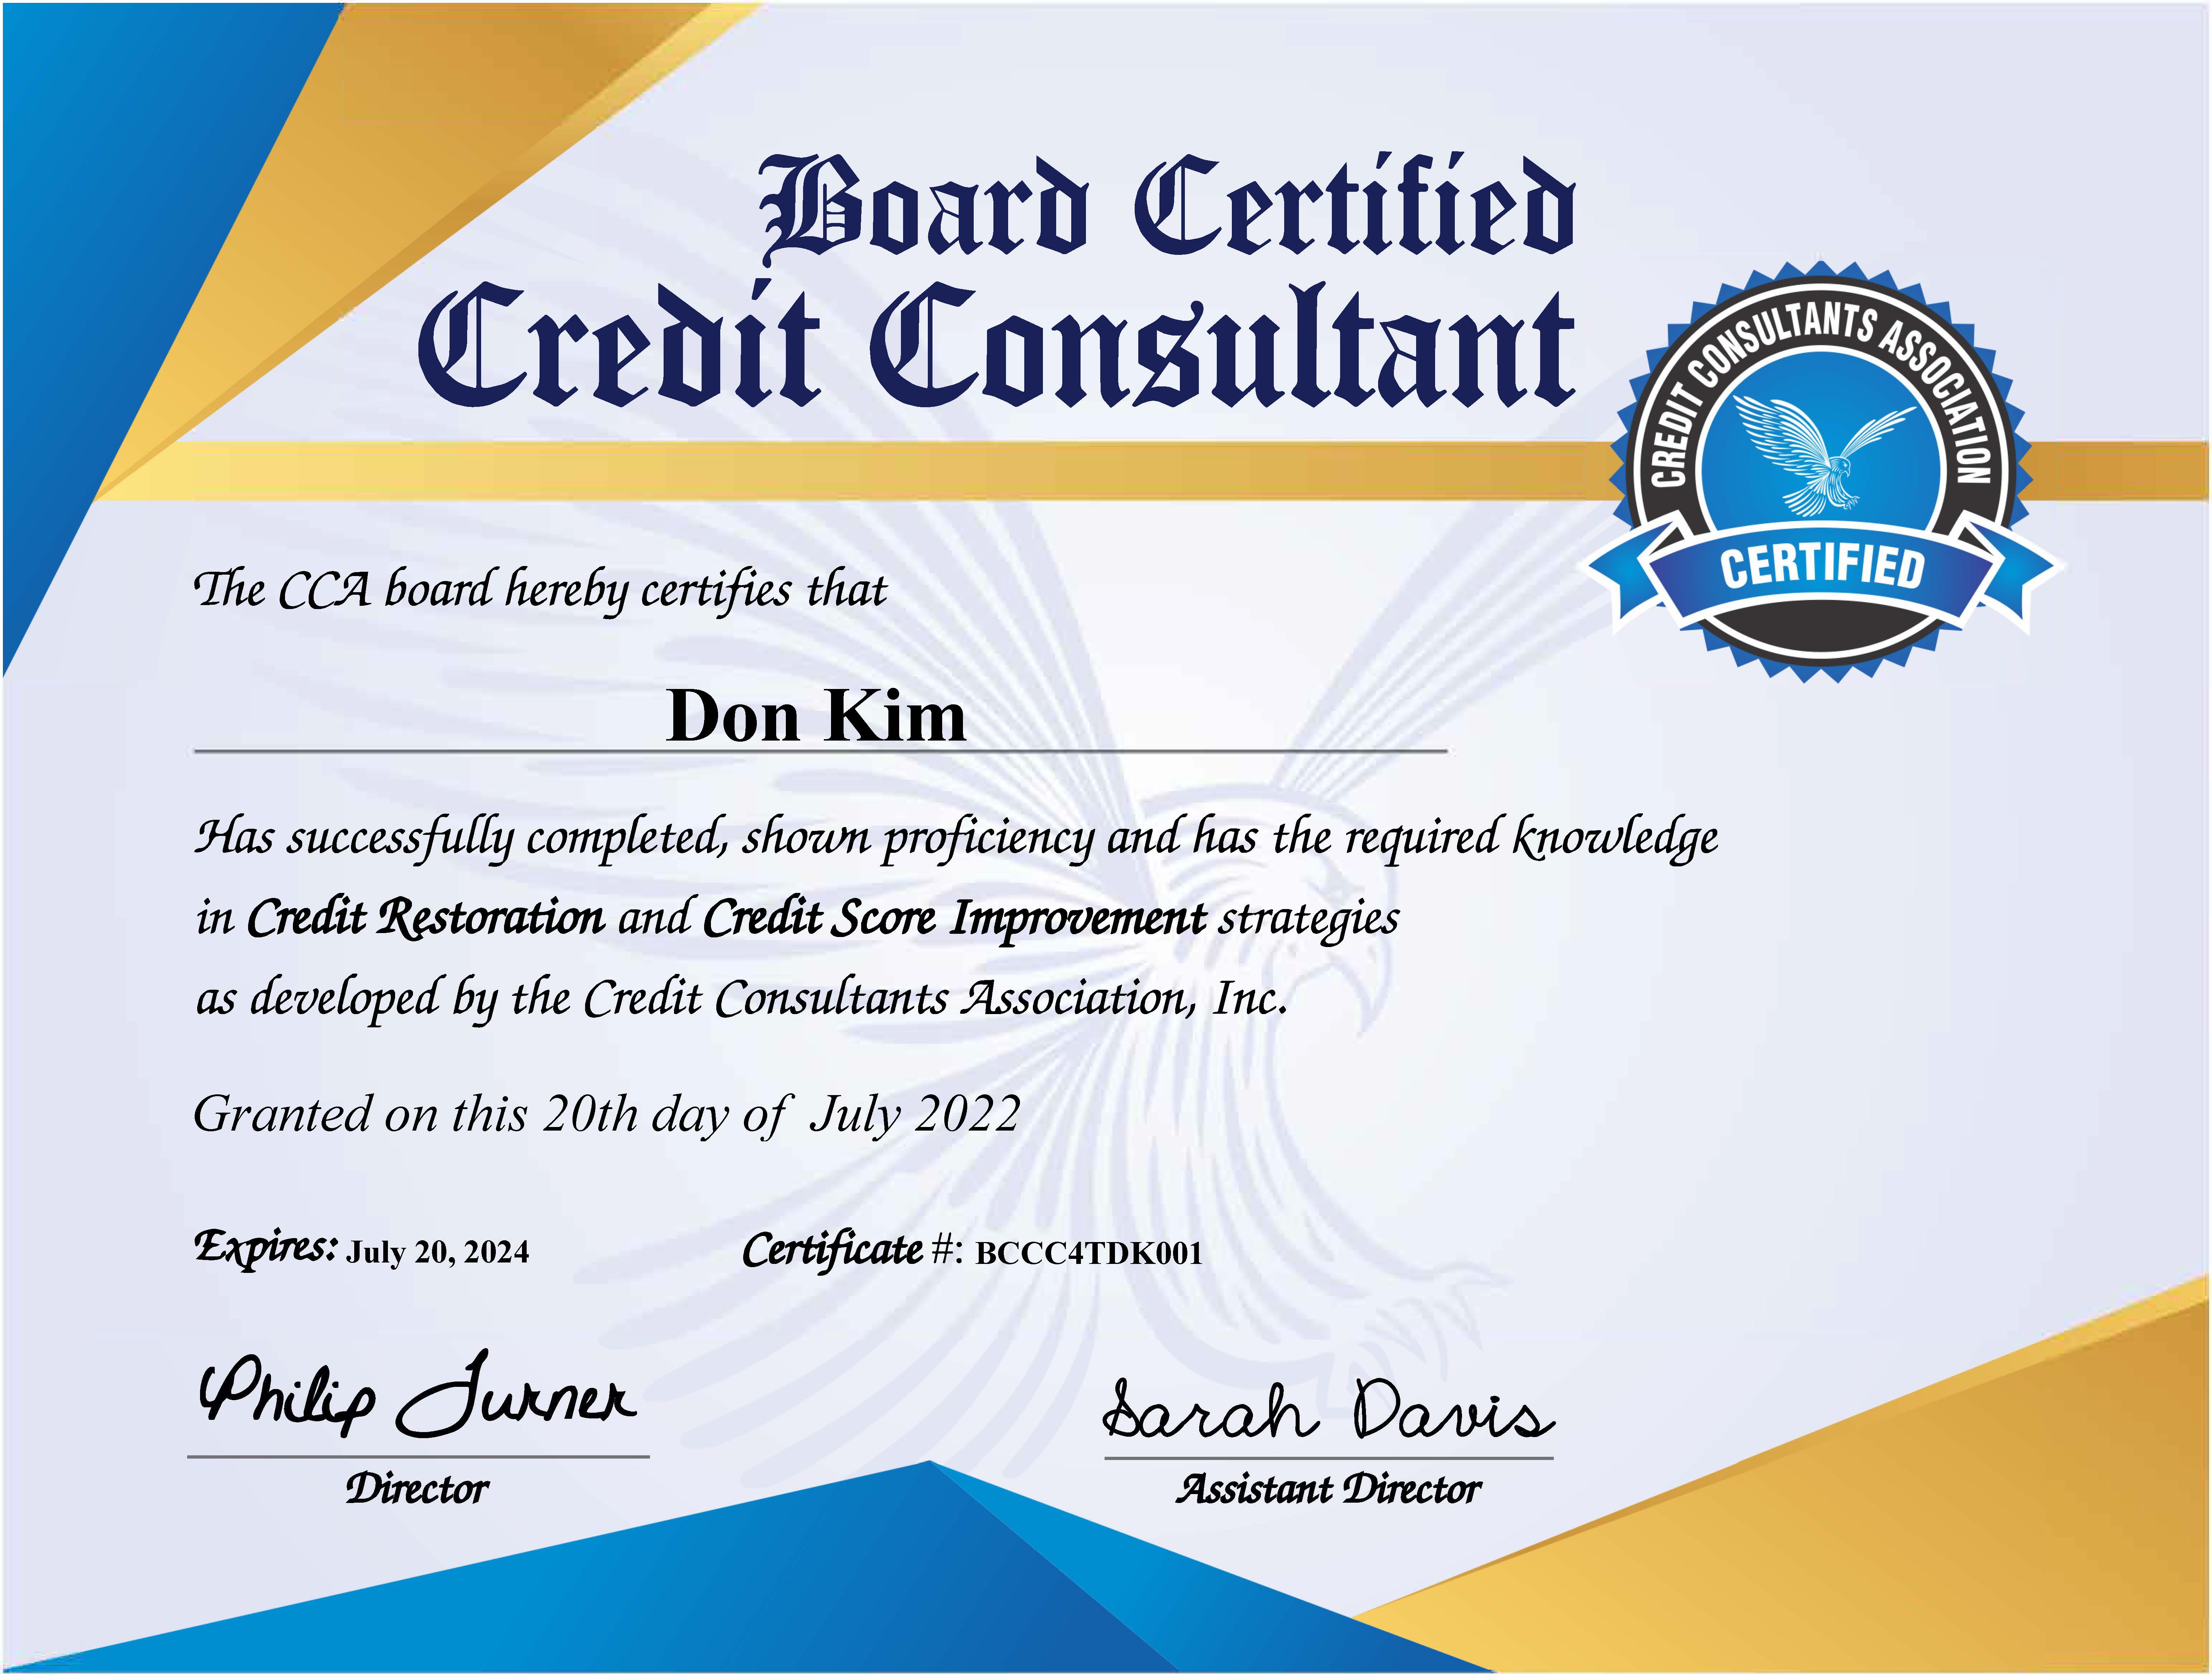 Don Kim - certification.jpg